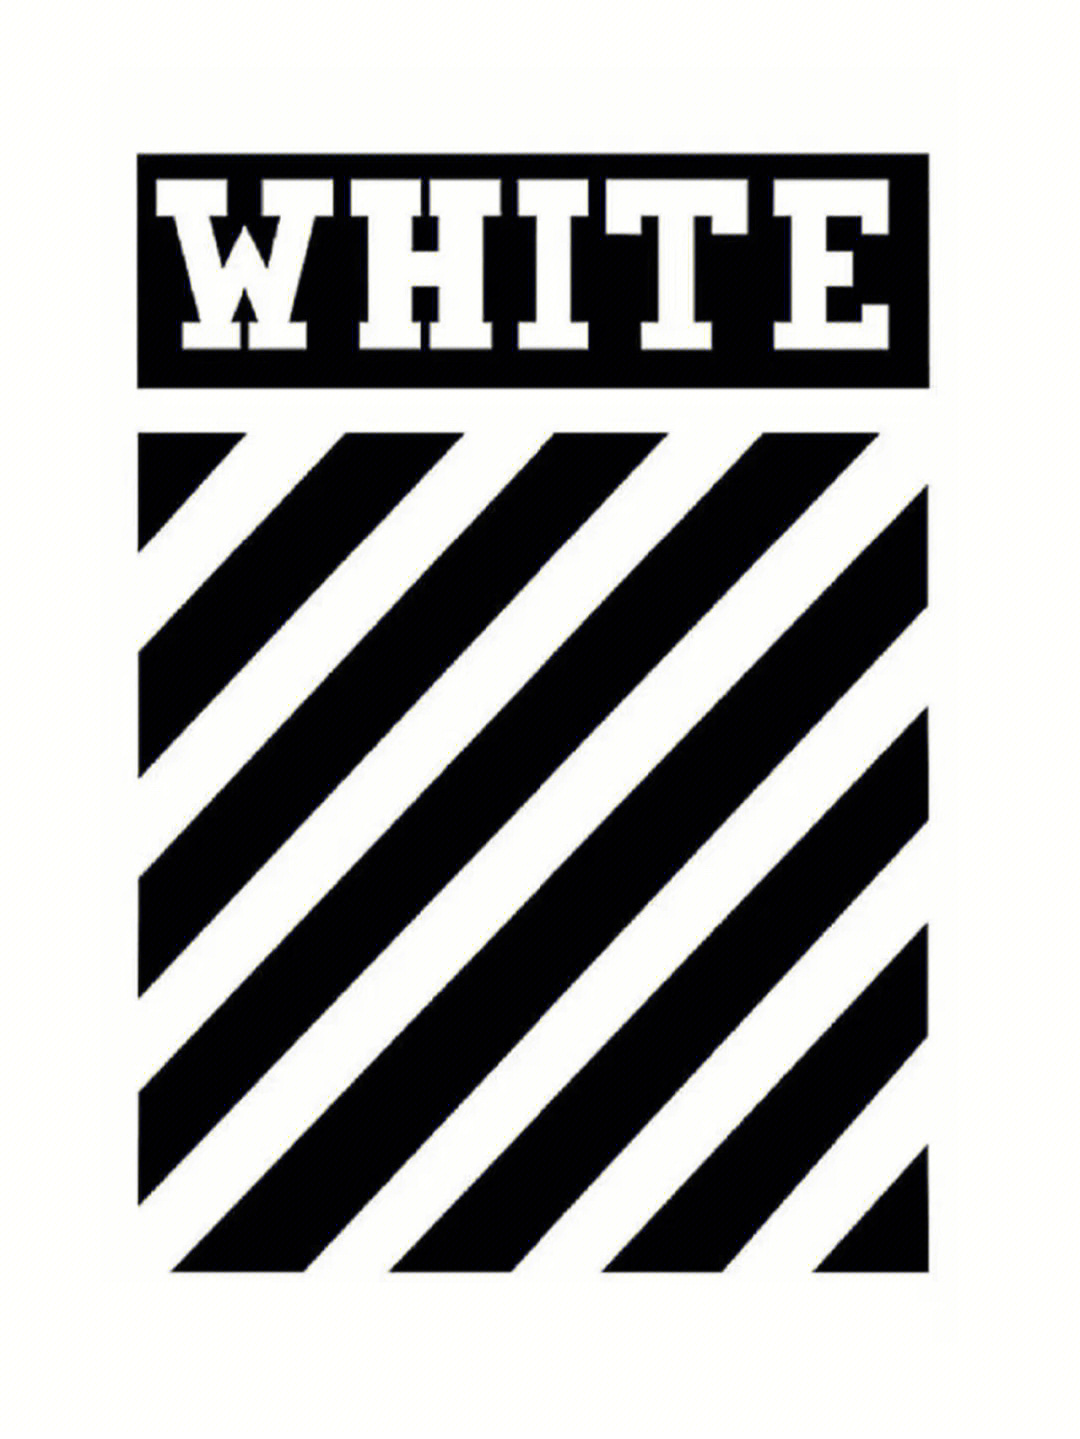 offwhite潮牌logo壁纸图片